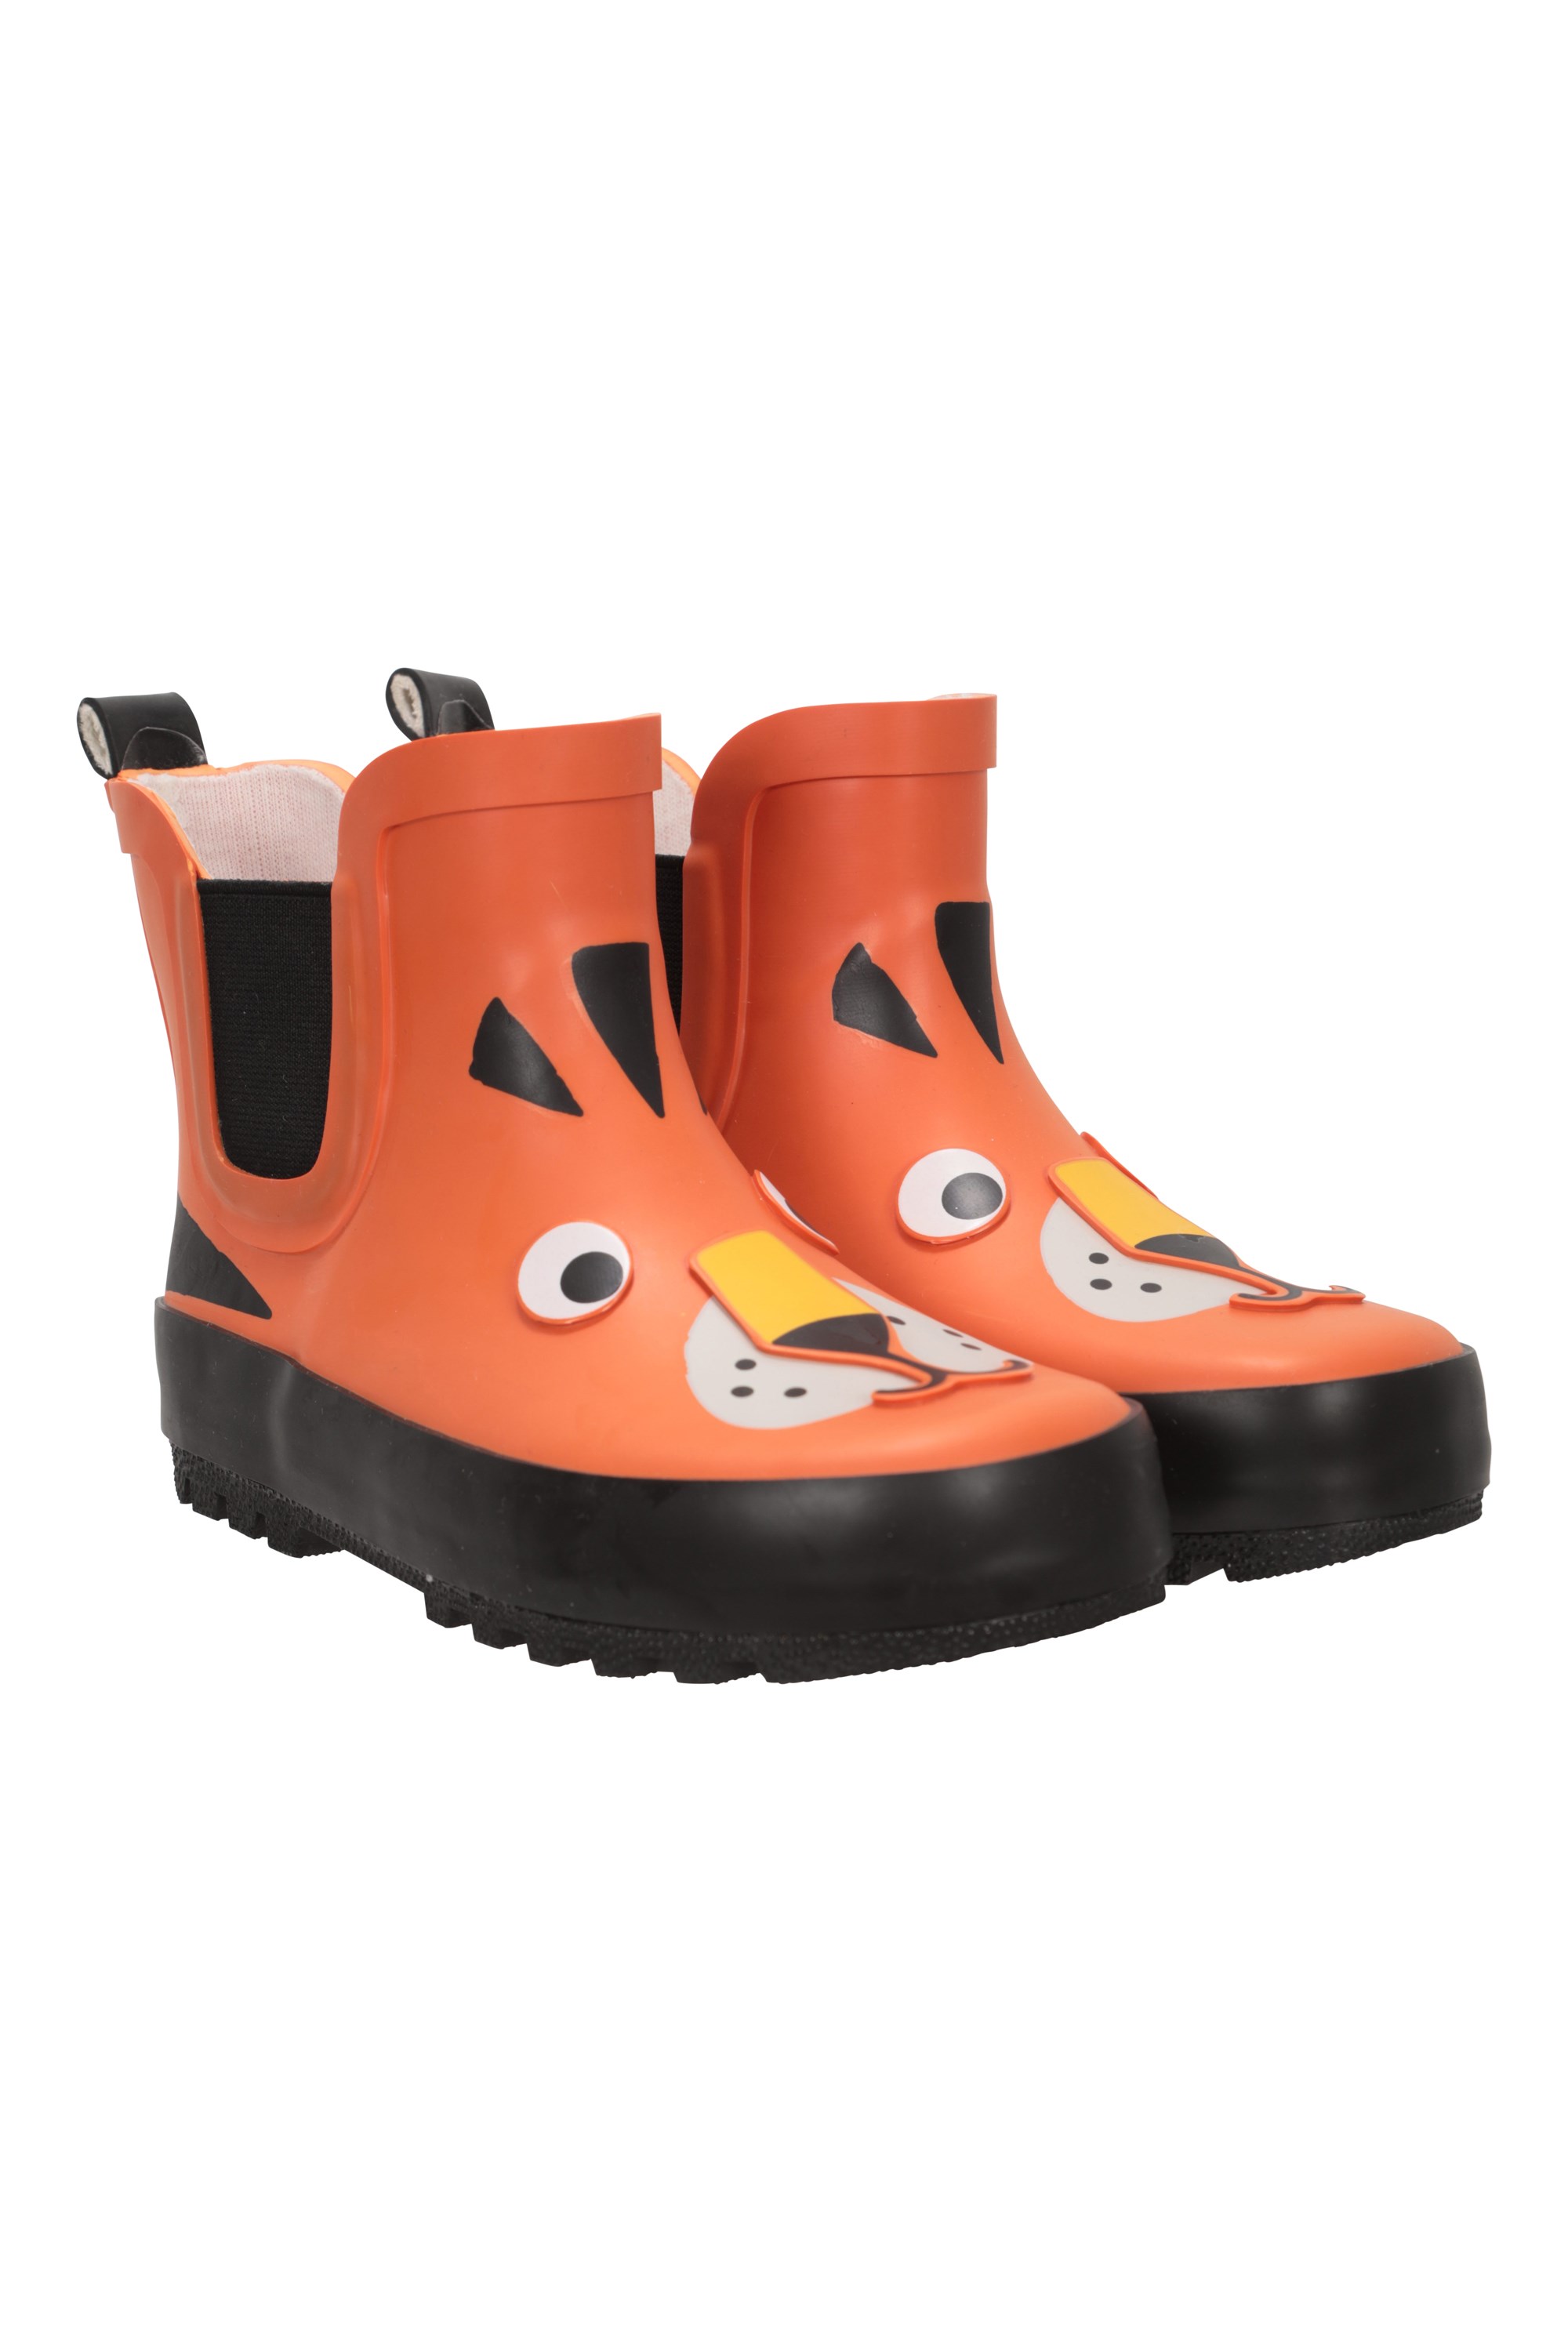 Mountain Warehouse Kids Wellies Waterproof Boys Girls Wellington Boots 